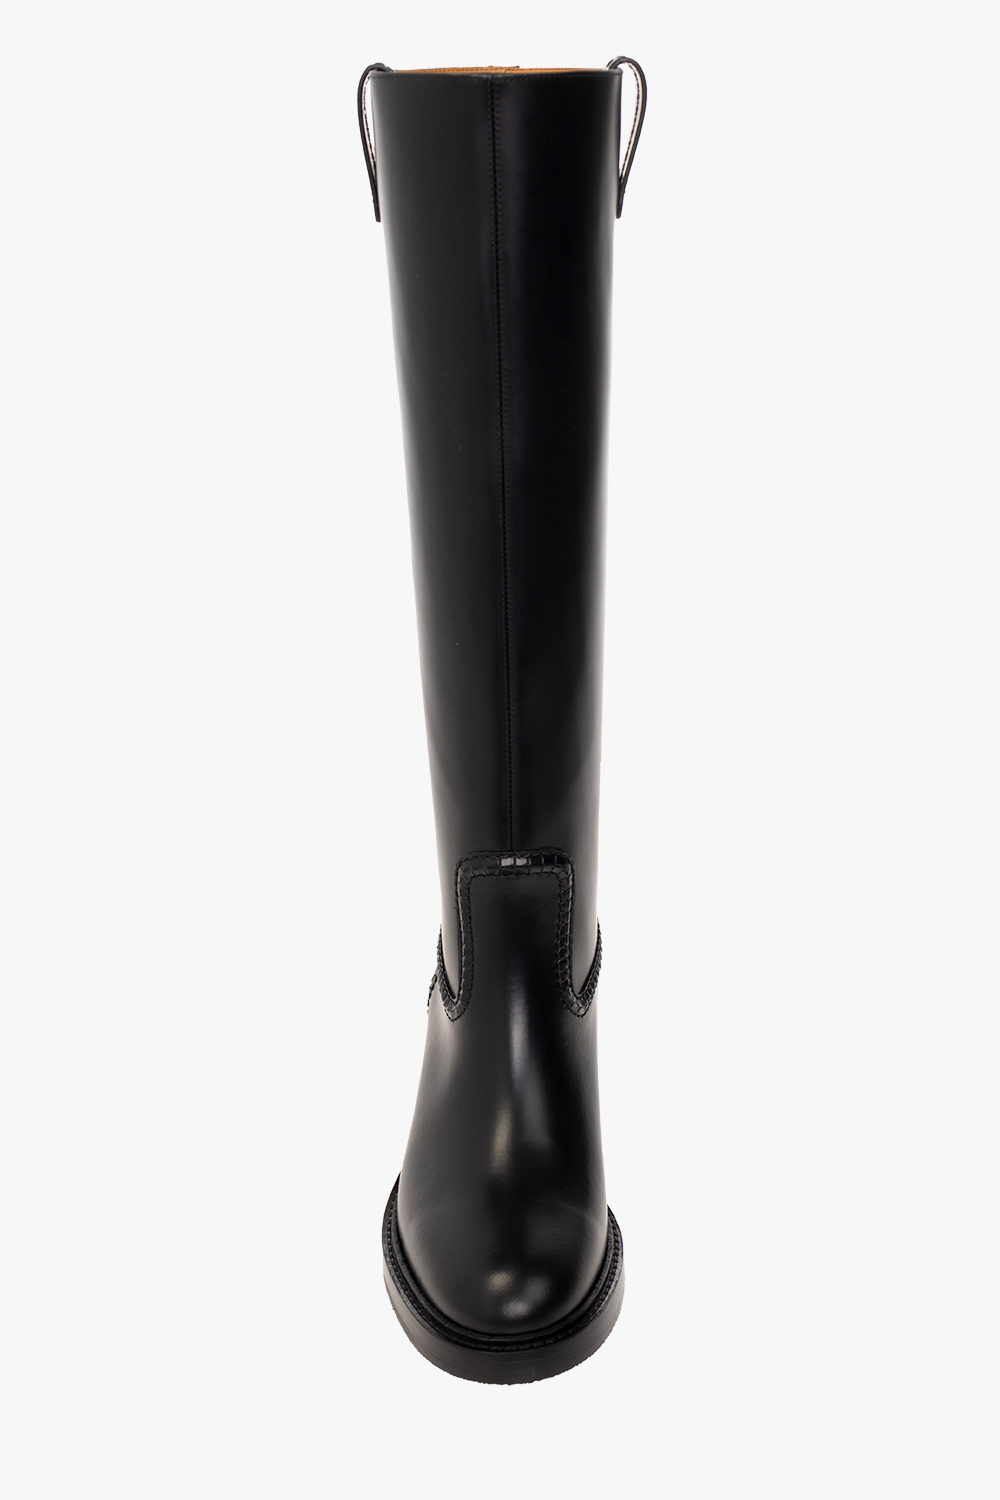 Chloé ‘Evening’ heeled boots